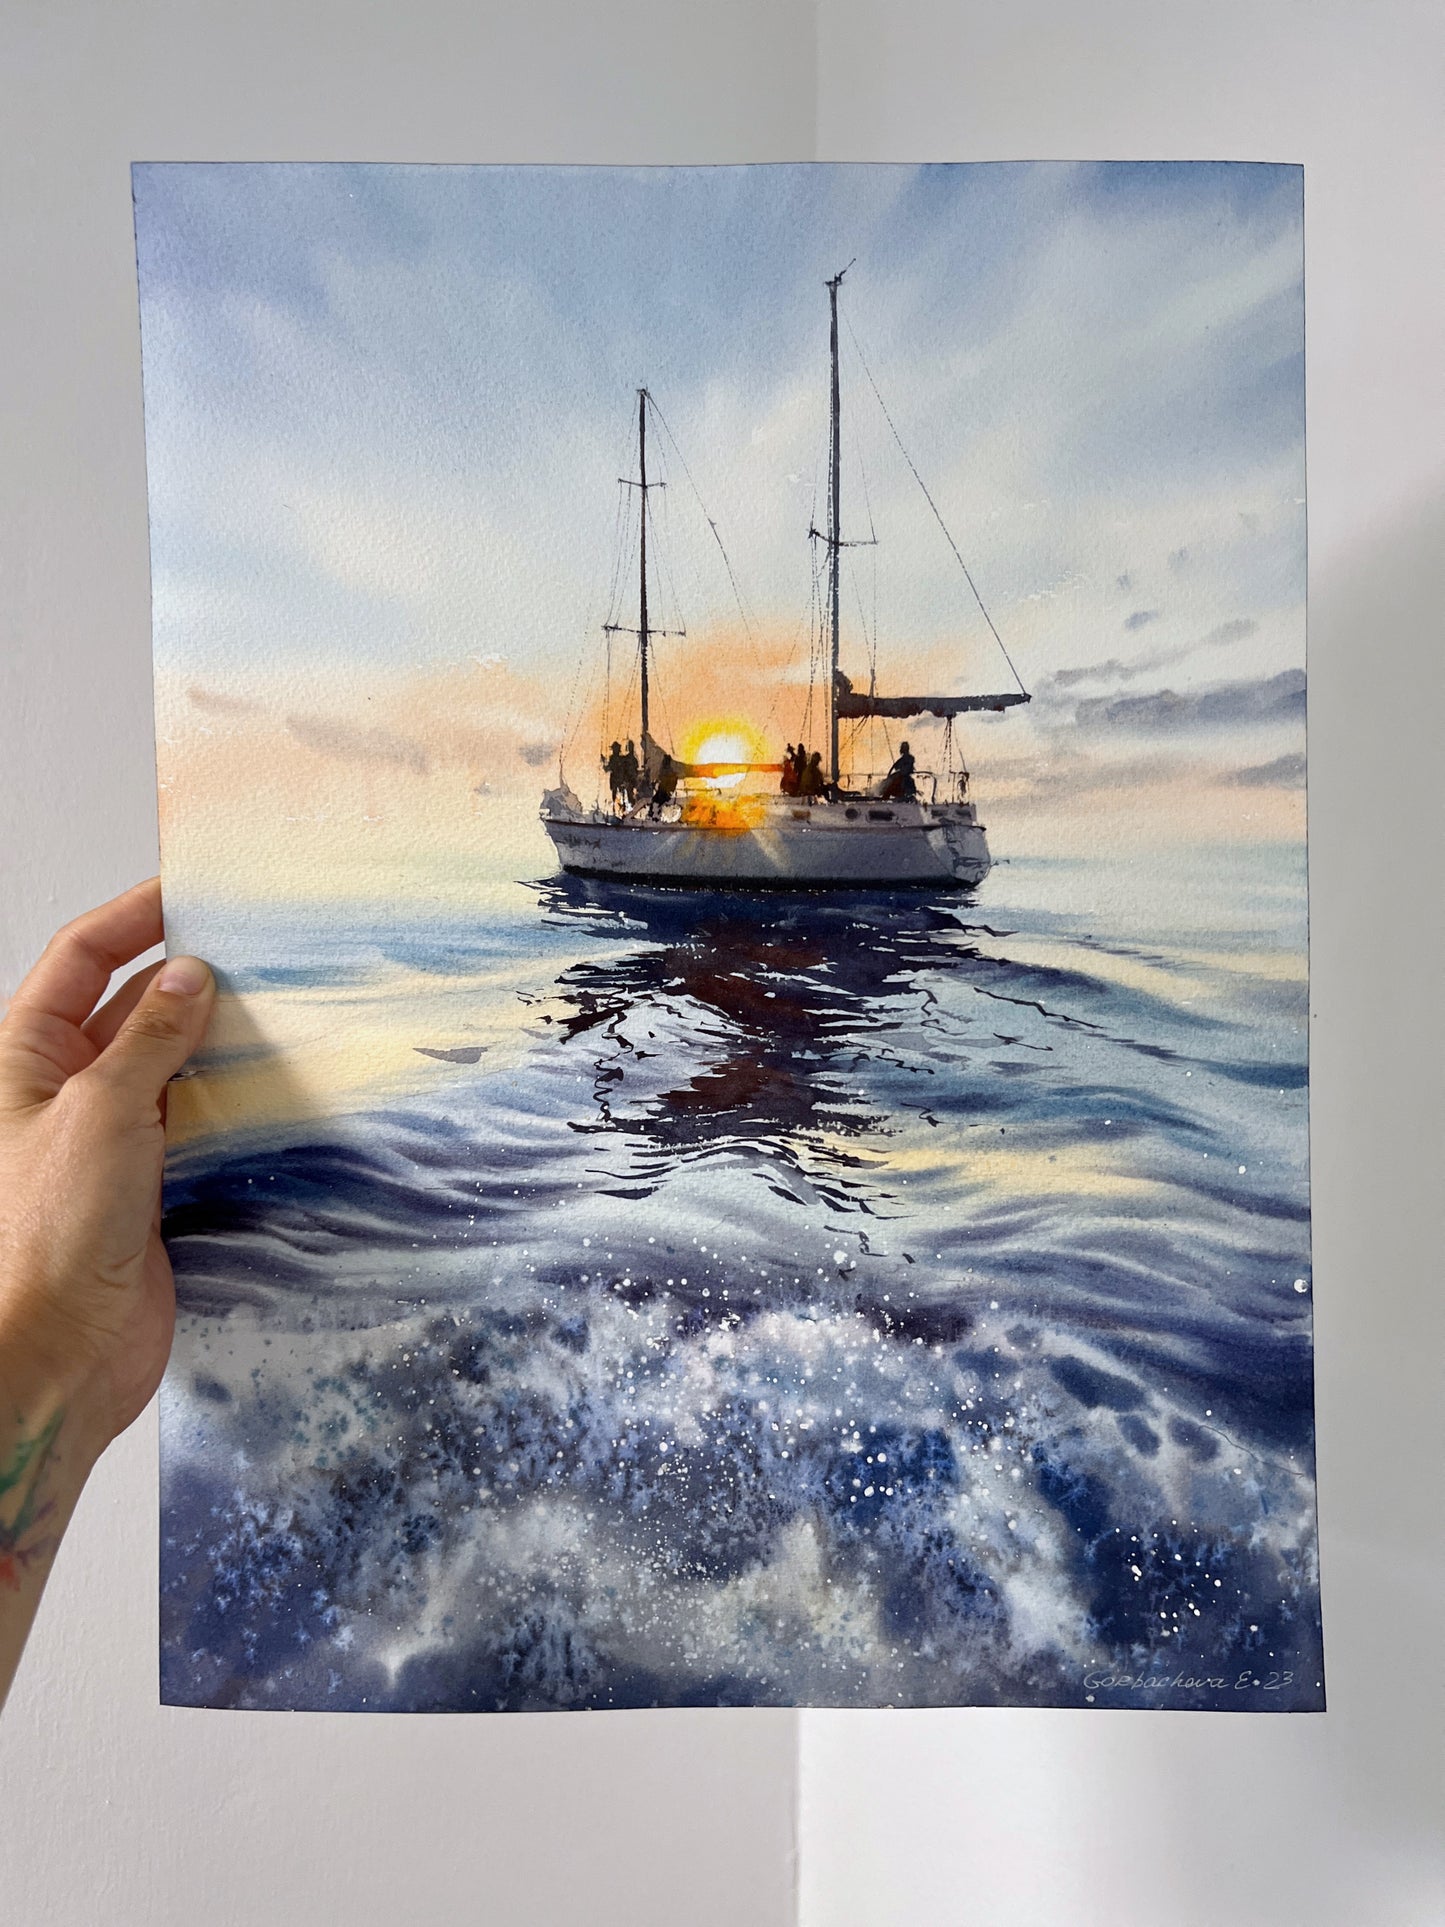 Sailboat Painting Original Watercolor, Yacht Artwork, Seascape Coast Art, Gift, Blue